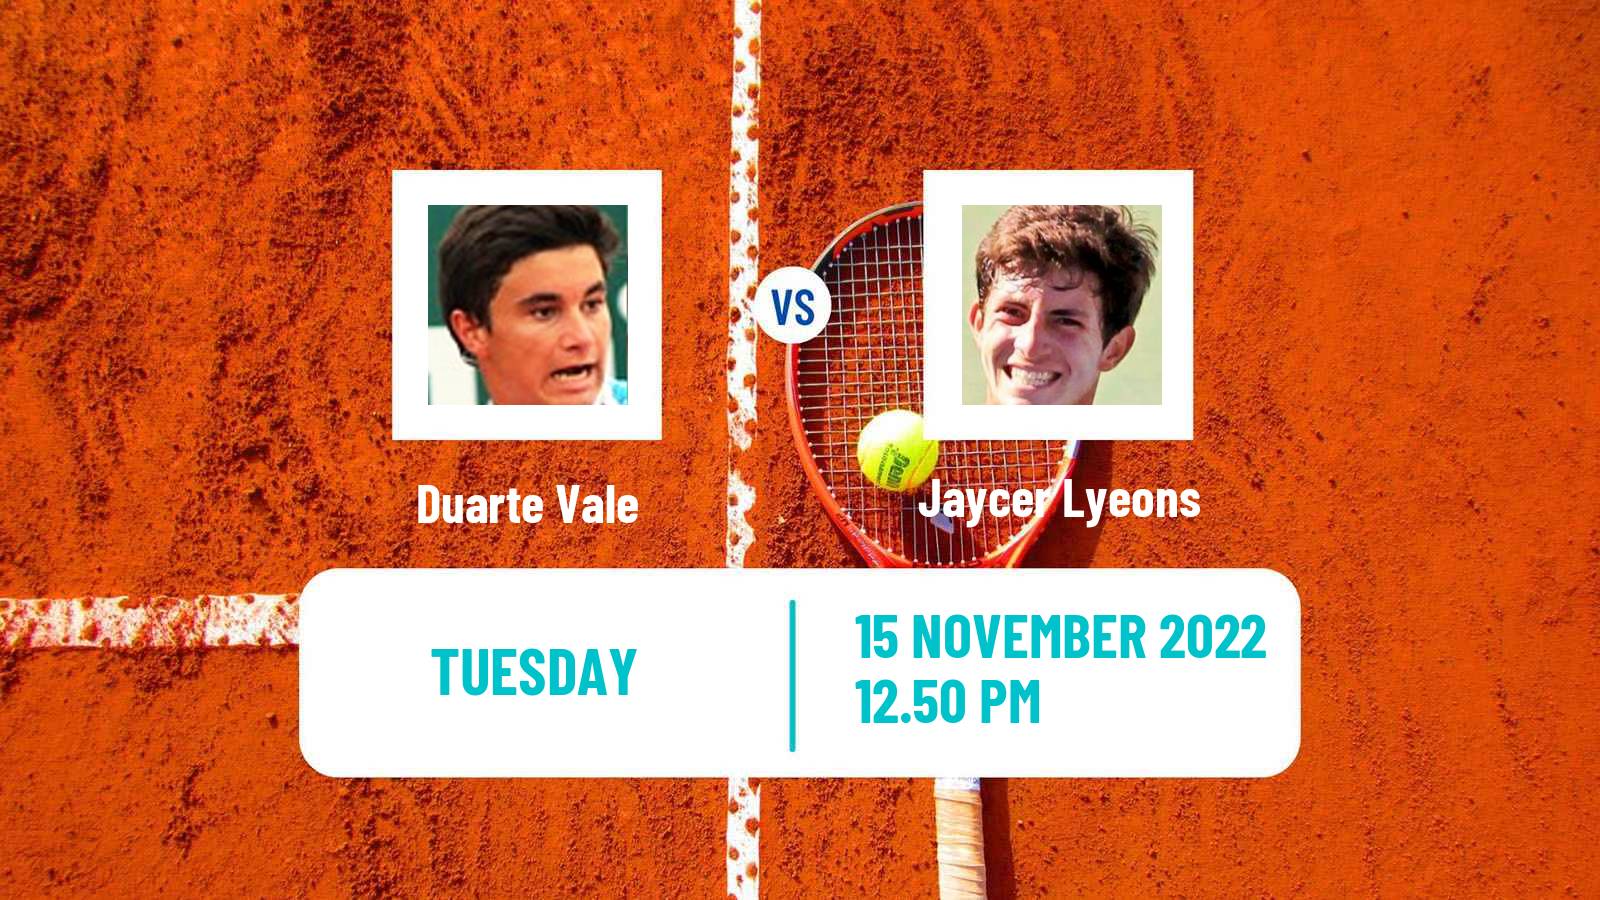 Tennis ITF Tournaments Duarte Vale - Jaycer Lyeons